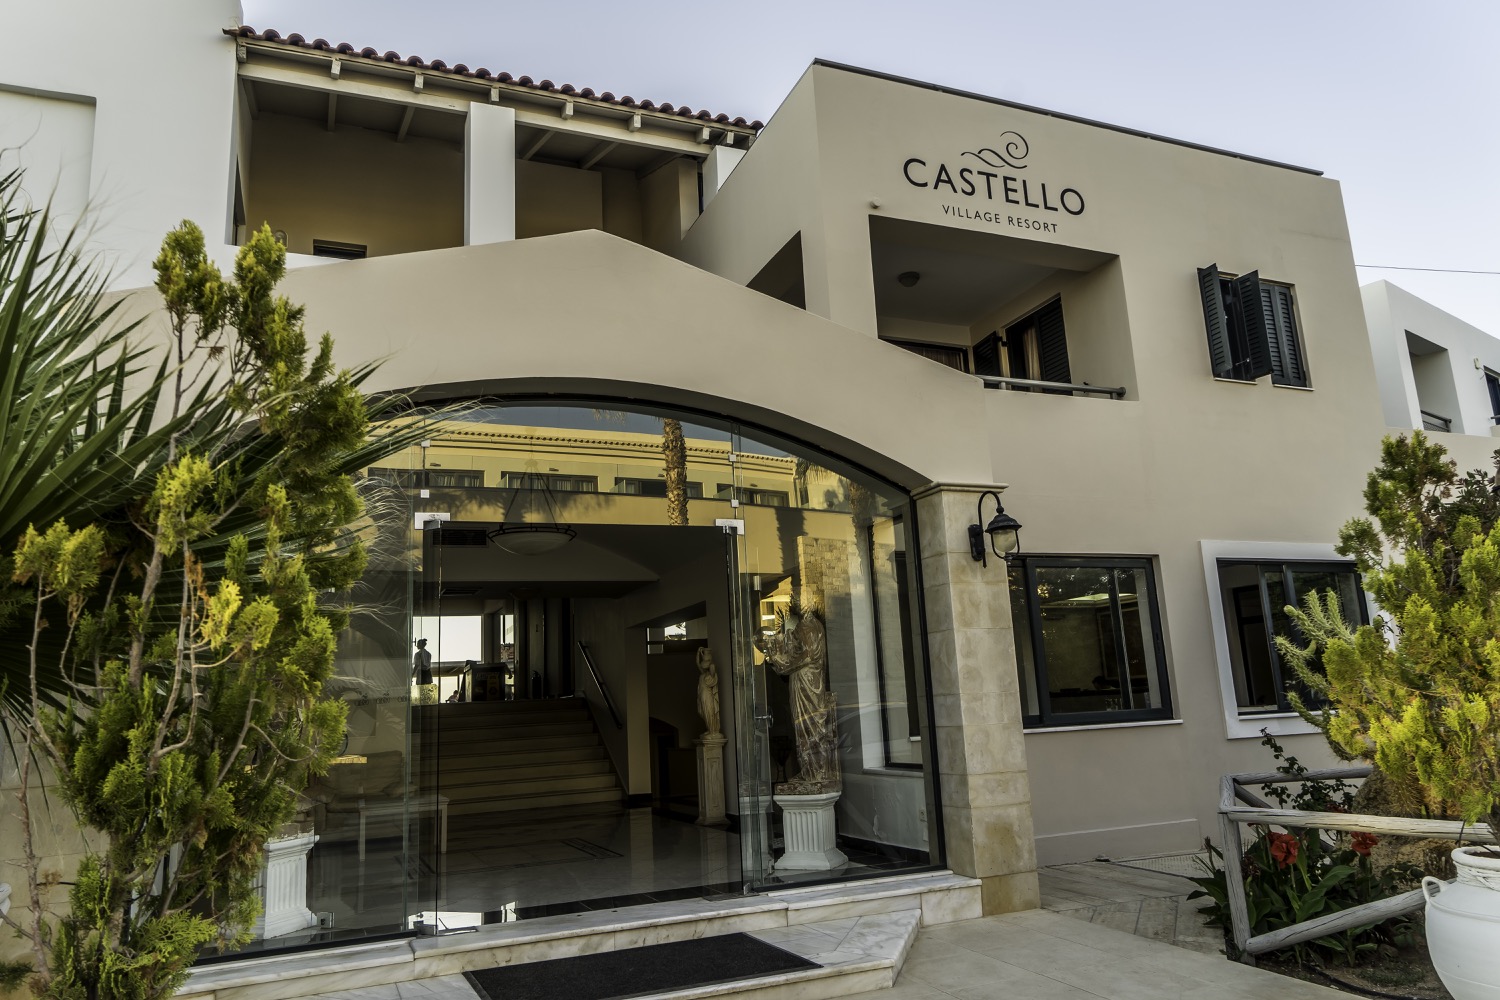 4* Castello Village Resort - Λασίθι, Κρήτη ✦ -10% ✦